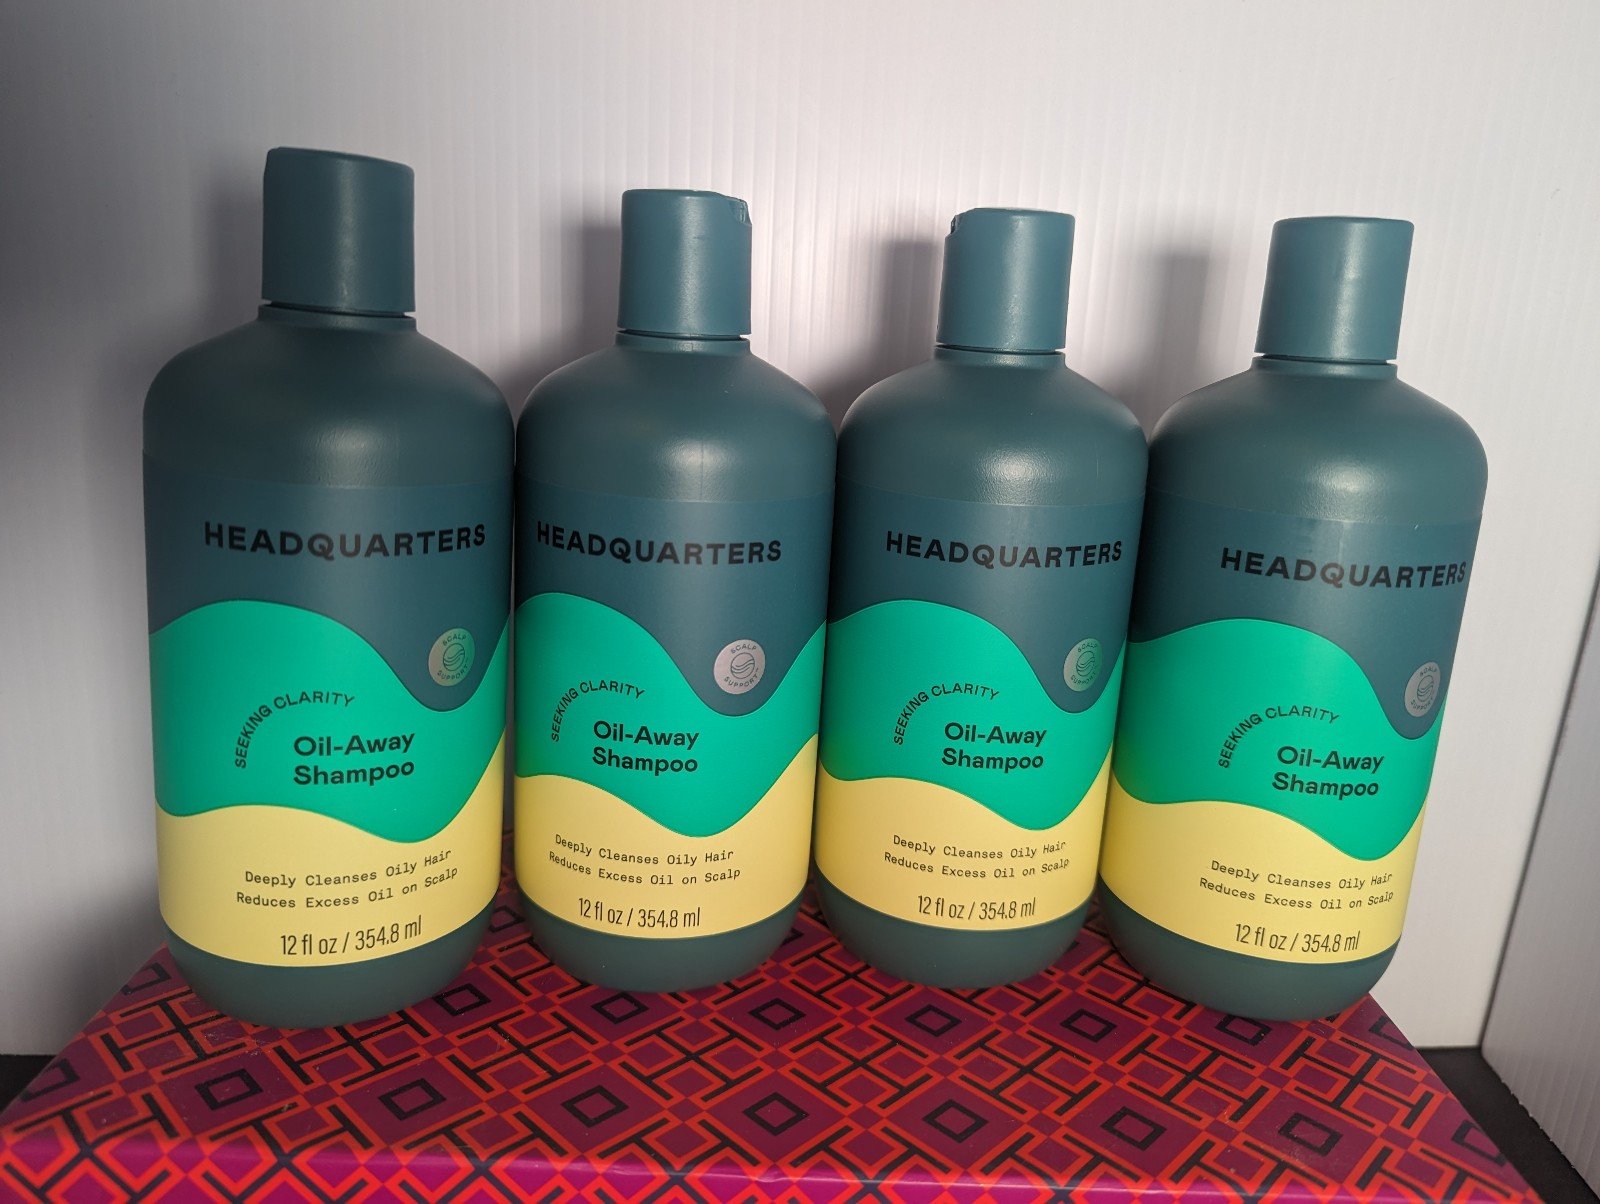 Lot of 4 bottles Headquarters oil away shampoo each Size 12 oz . nrLMz6lbG